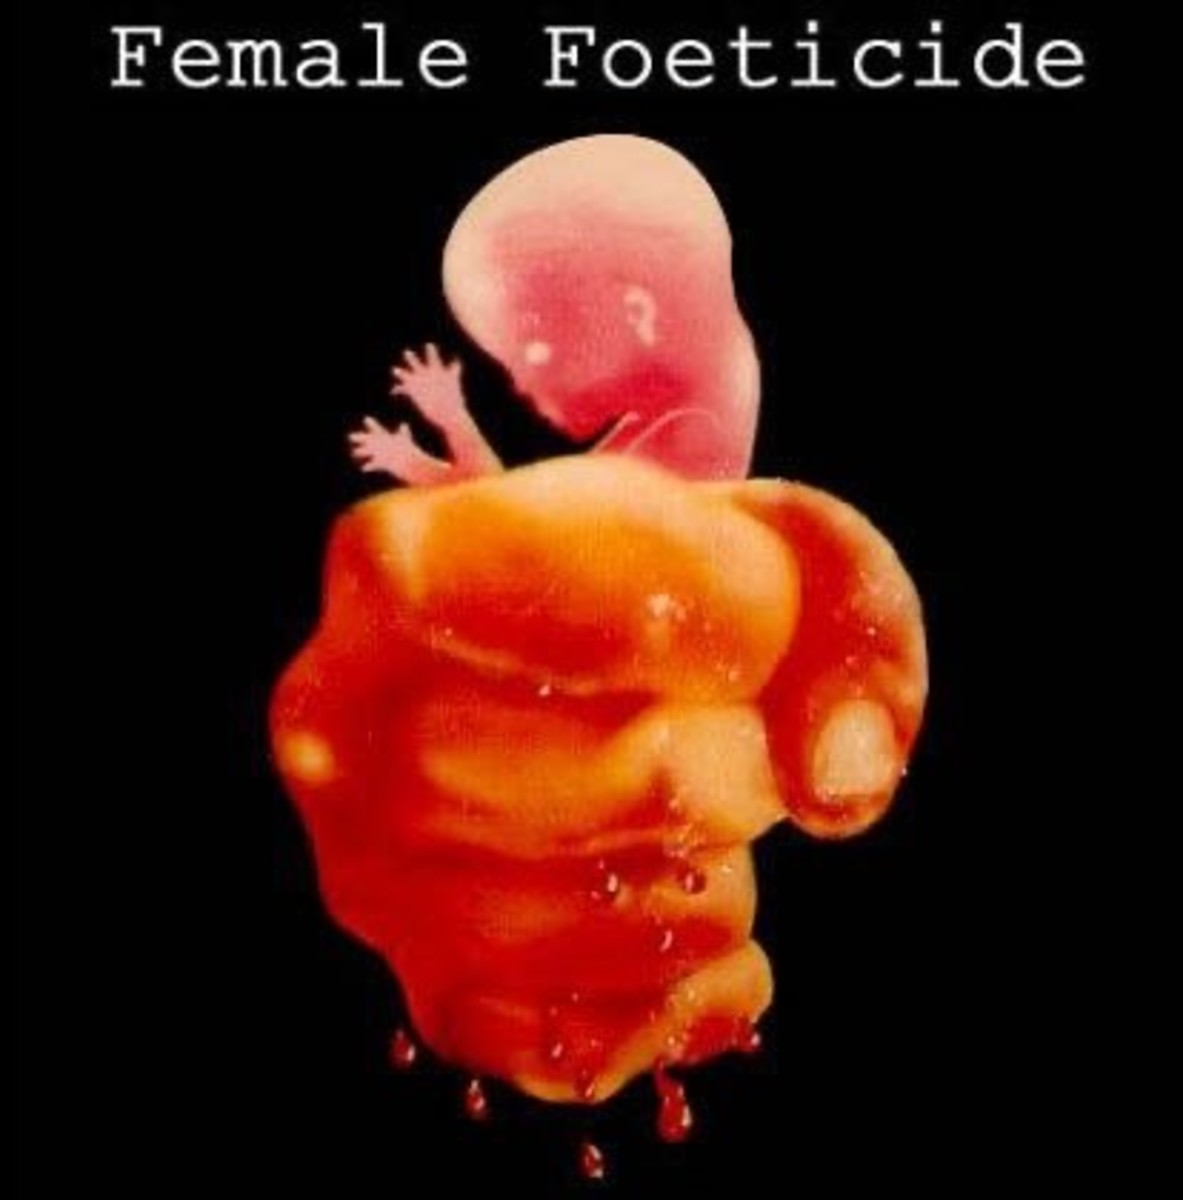 Female Foeticide - Let an Innocent Child Live